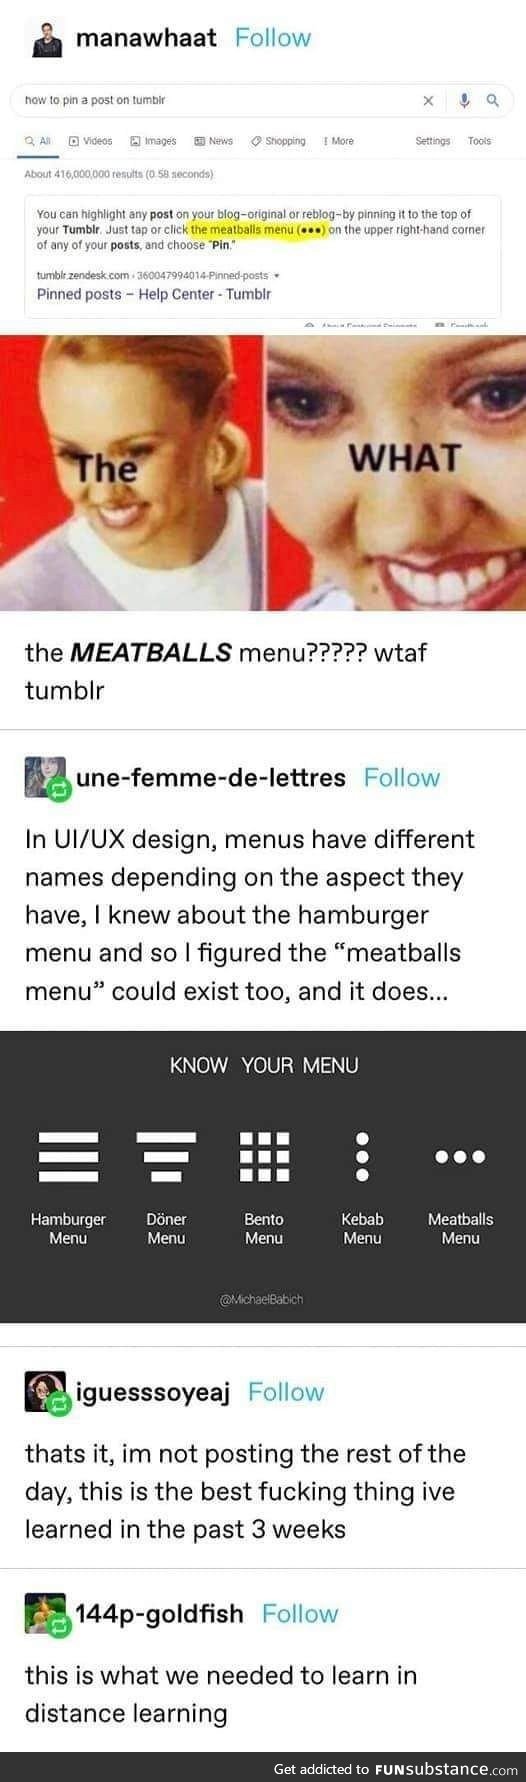 The meatballs menu